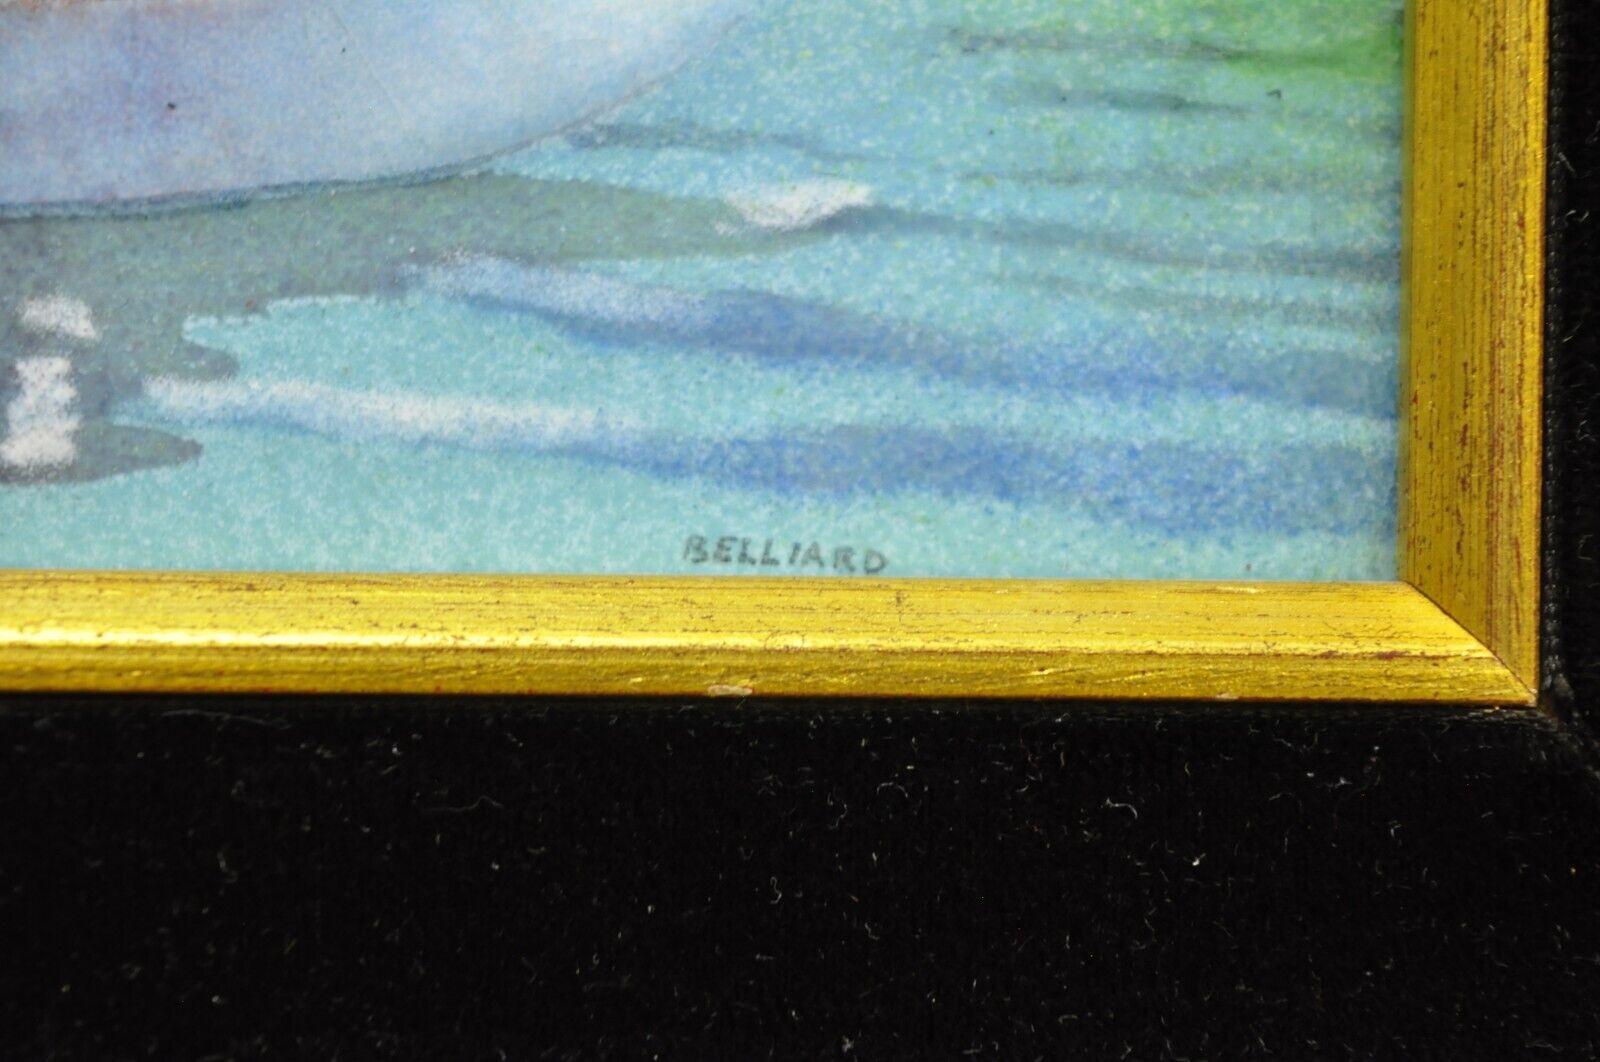 Daniel Belliard Enamel on Copper Small Framed Painting Fisherman in Boat on Lake For Sale 1